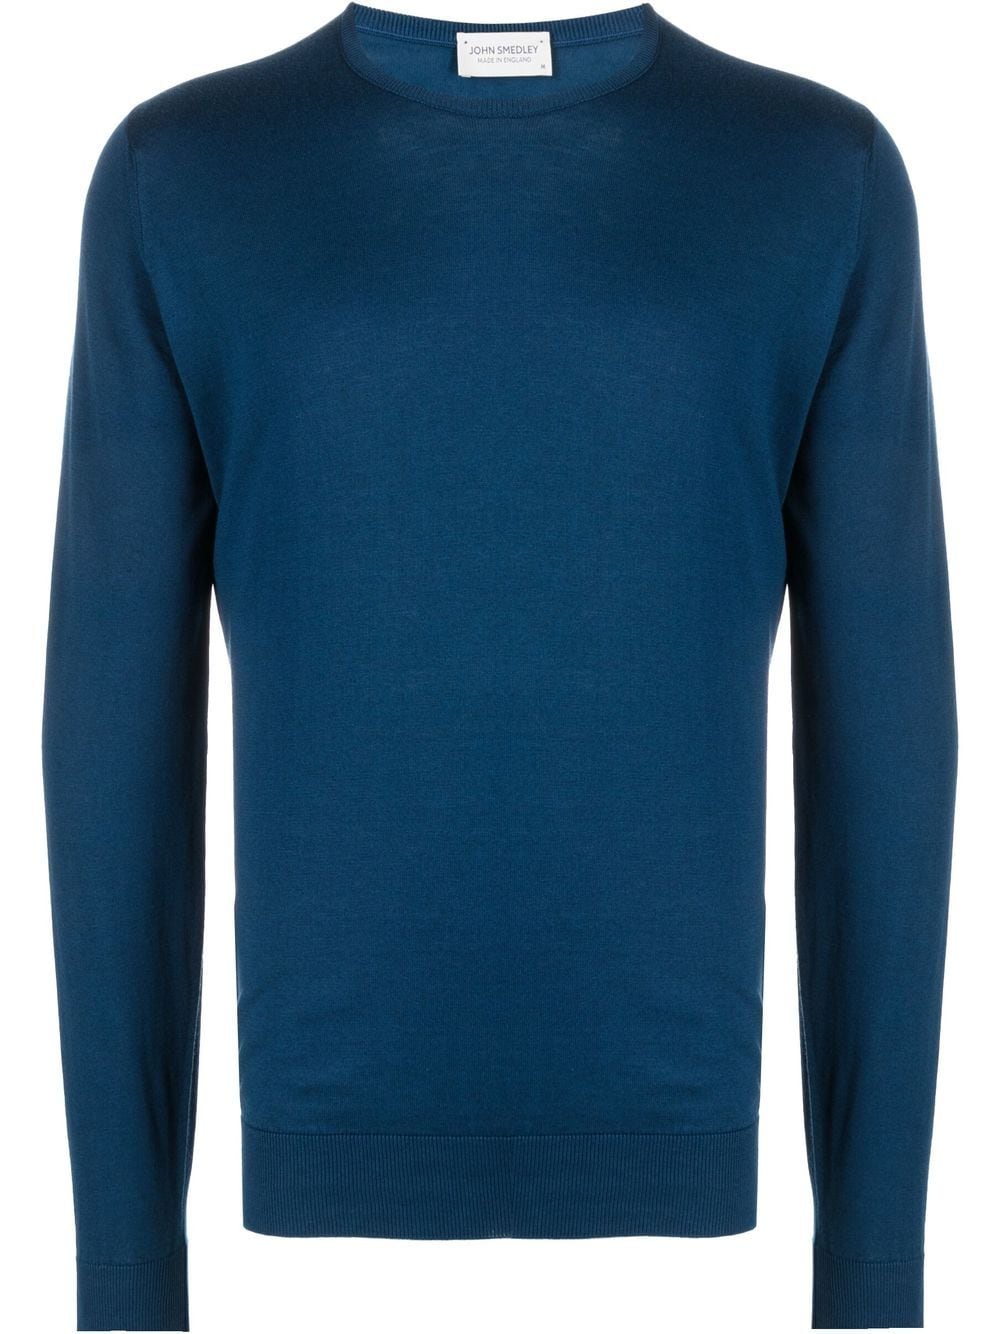 John Smedley round neck knit jumper - Blue von John Smedley